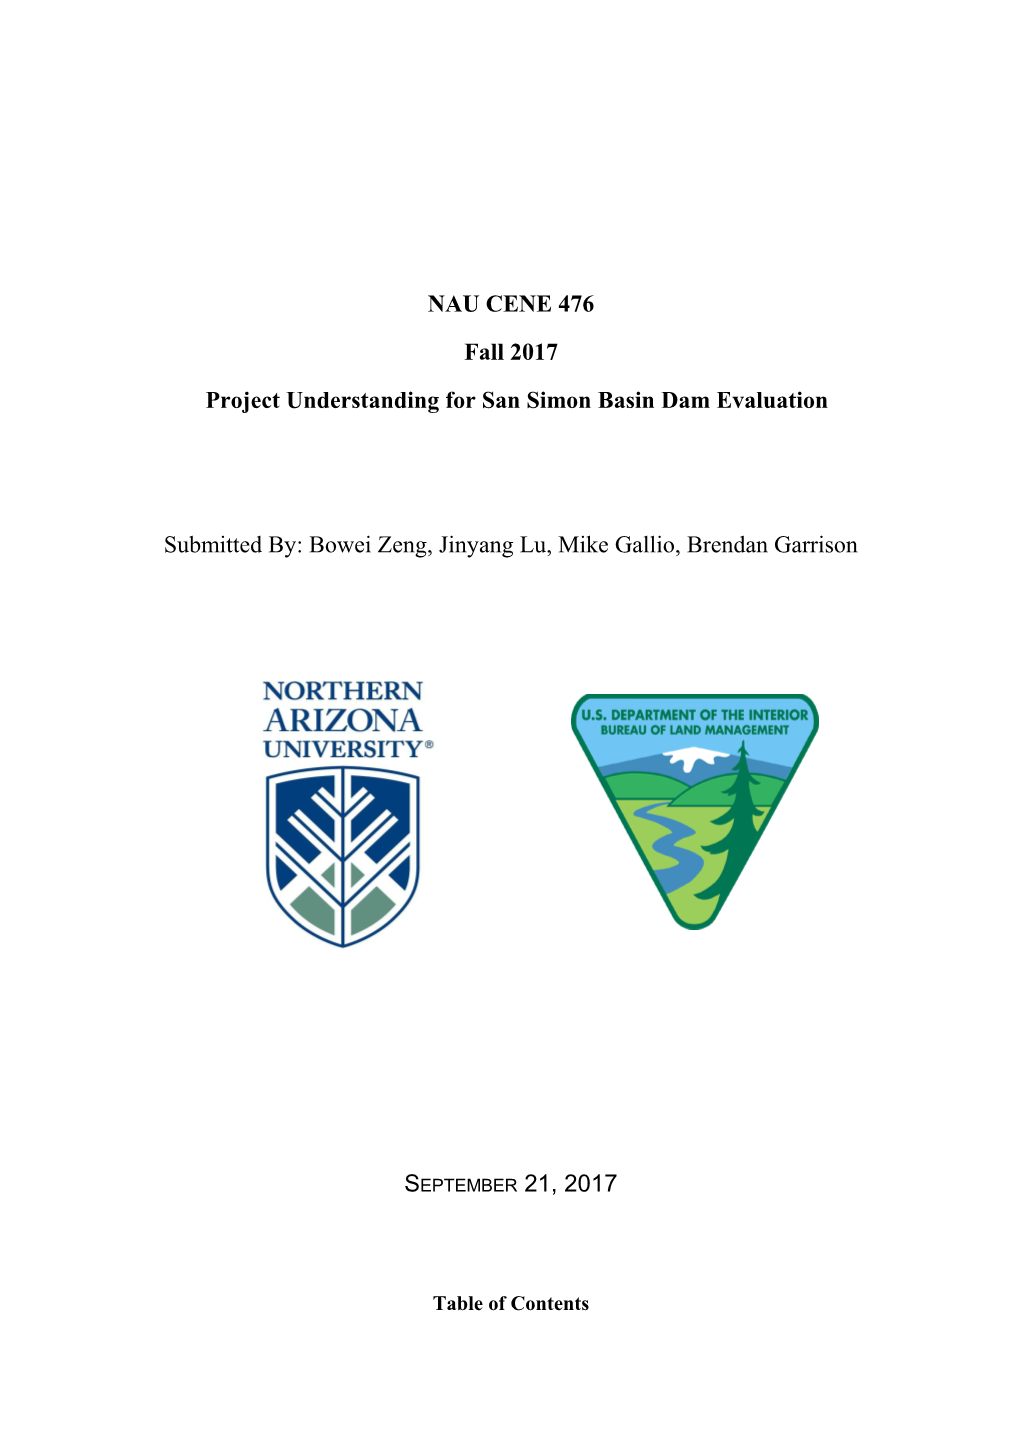 Project Understanding for San Simon Basin Dam Evaluation